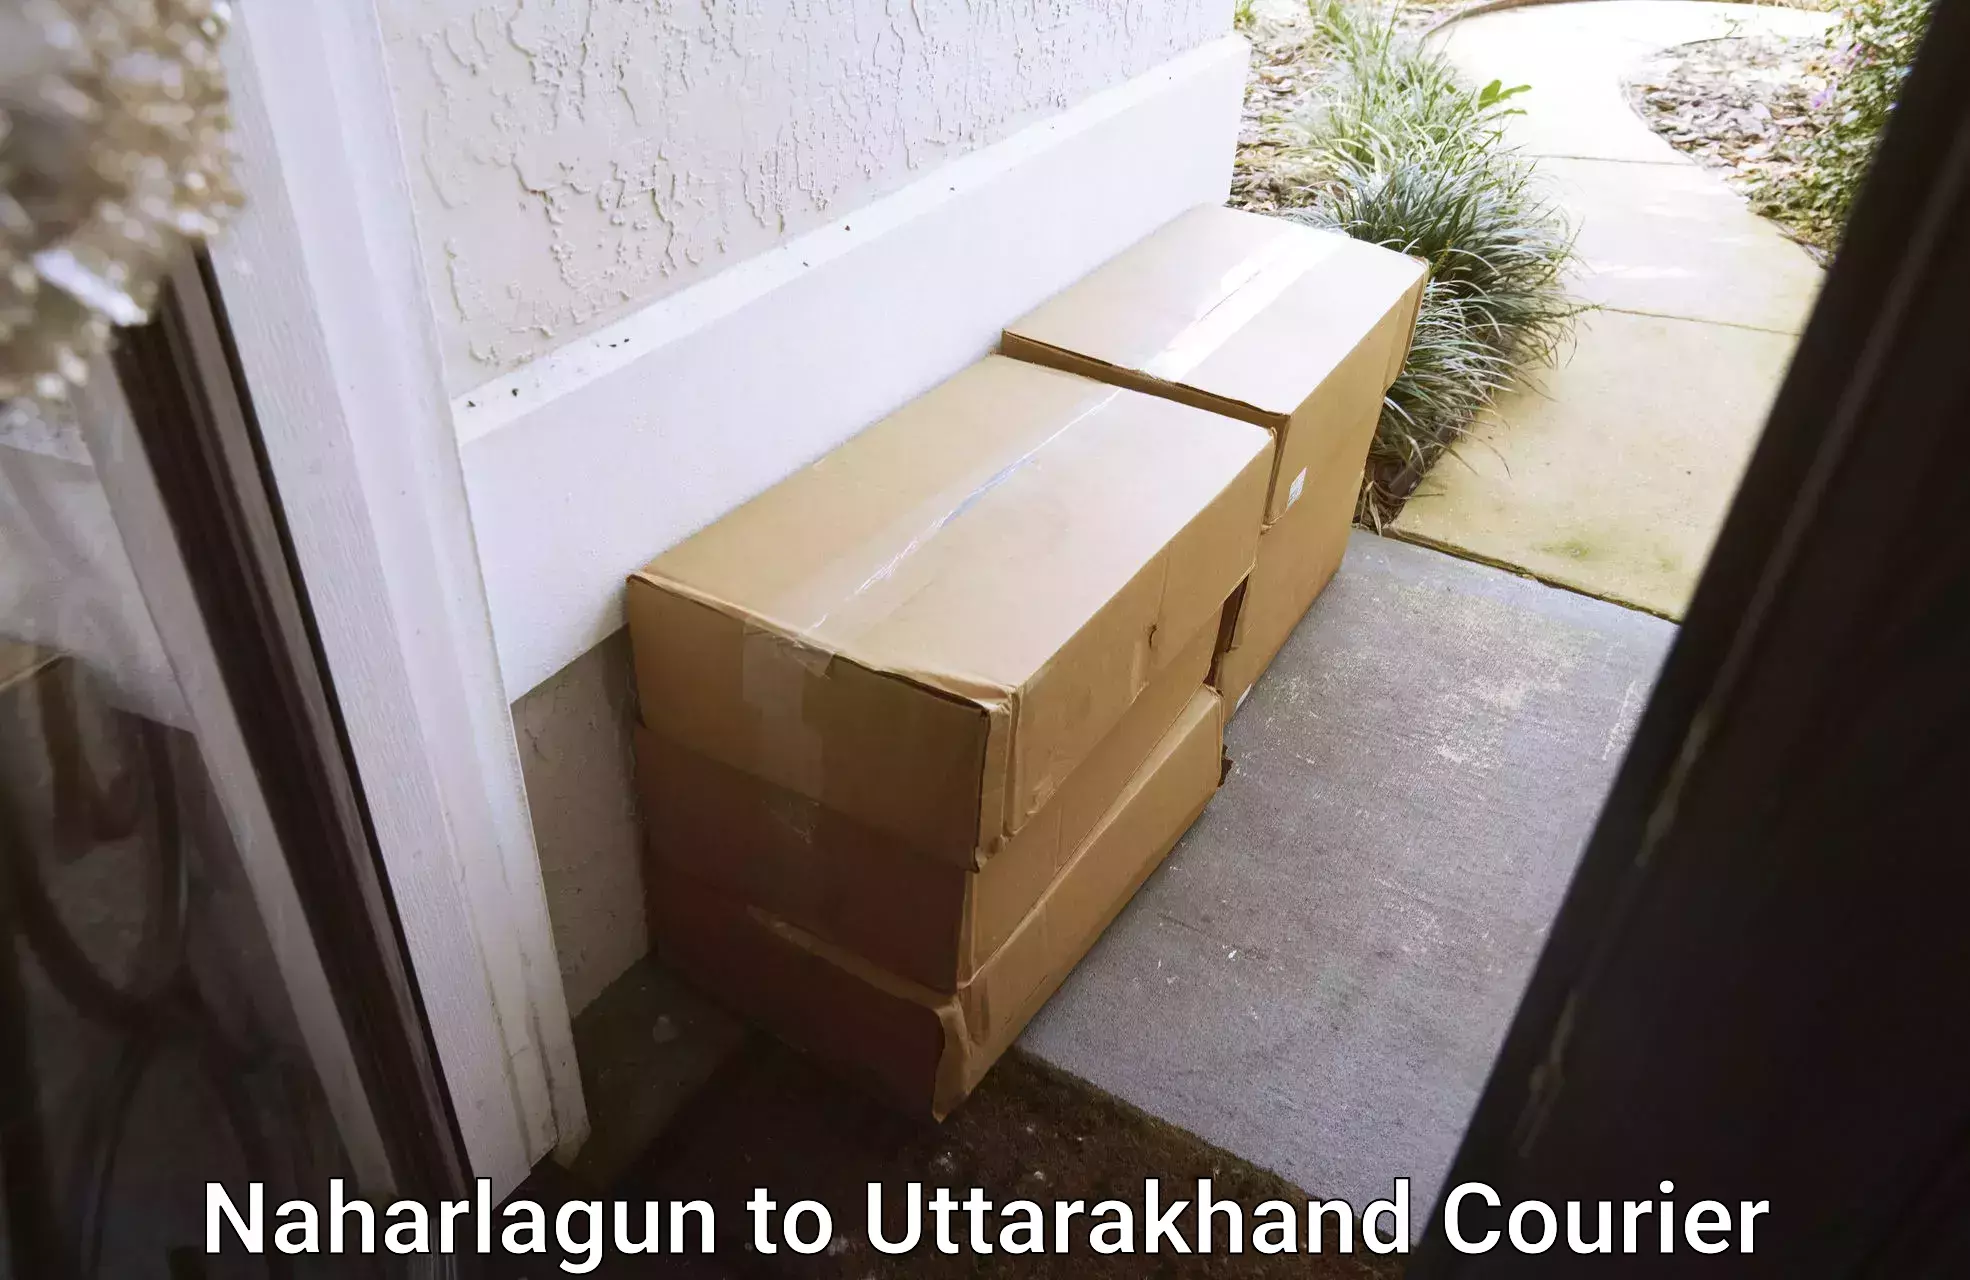 Express delivery capabilities Naharlagun to Dehradun